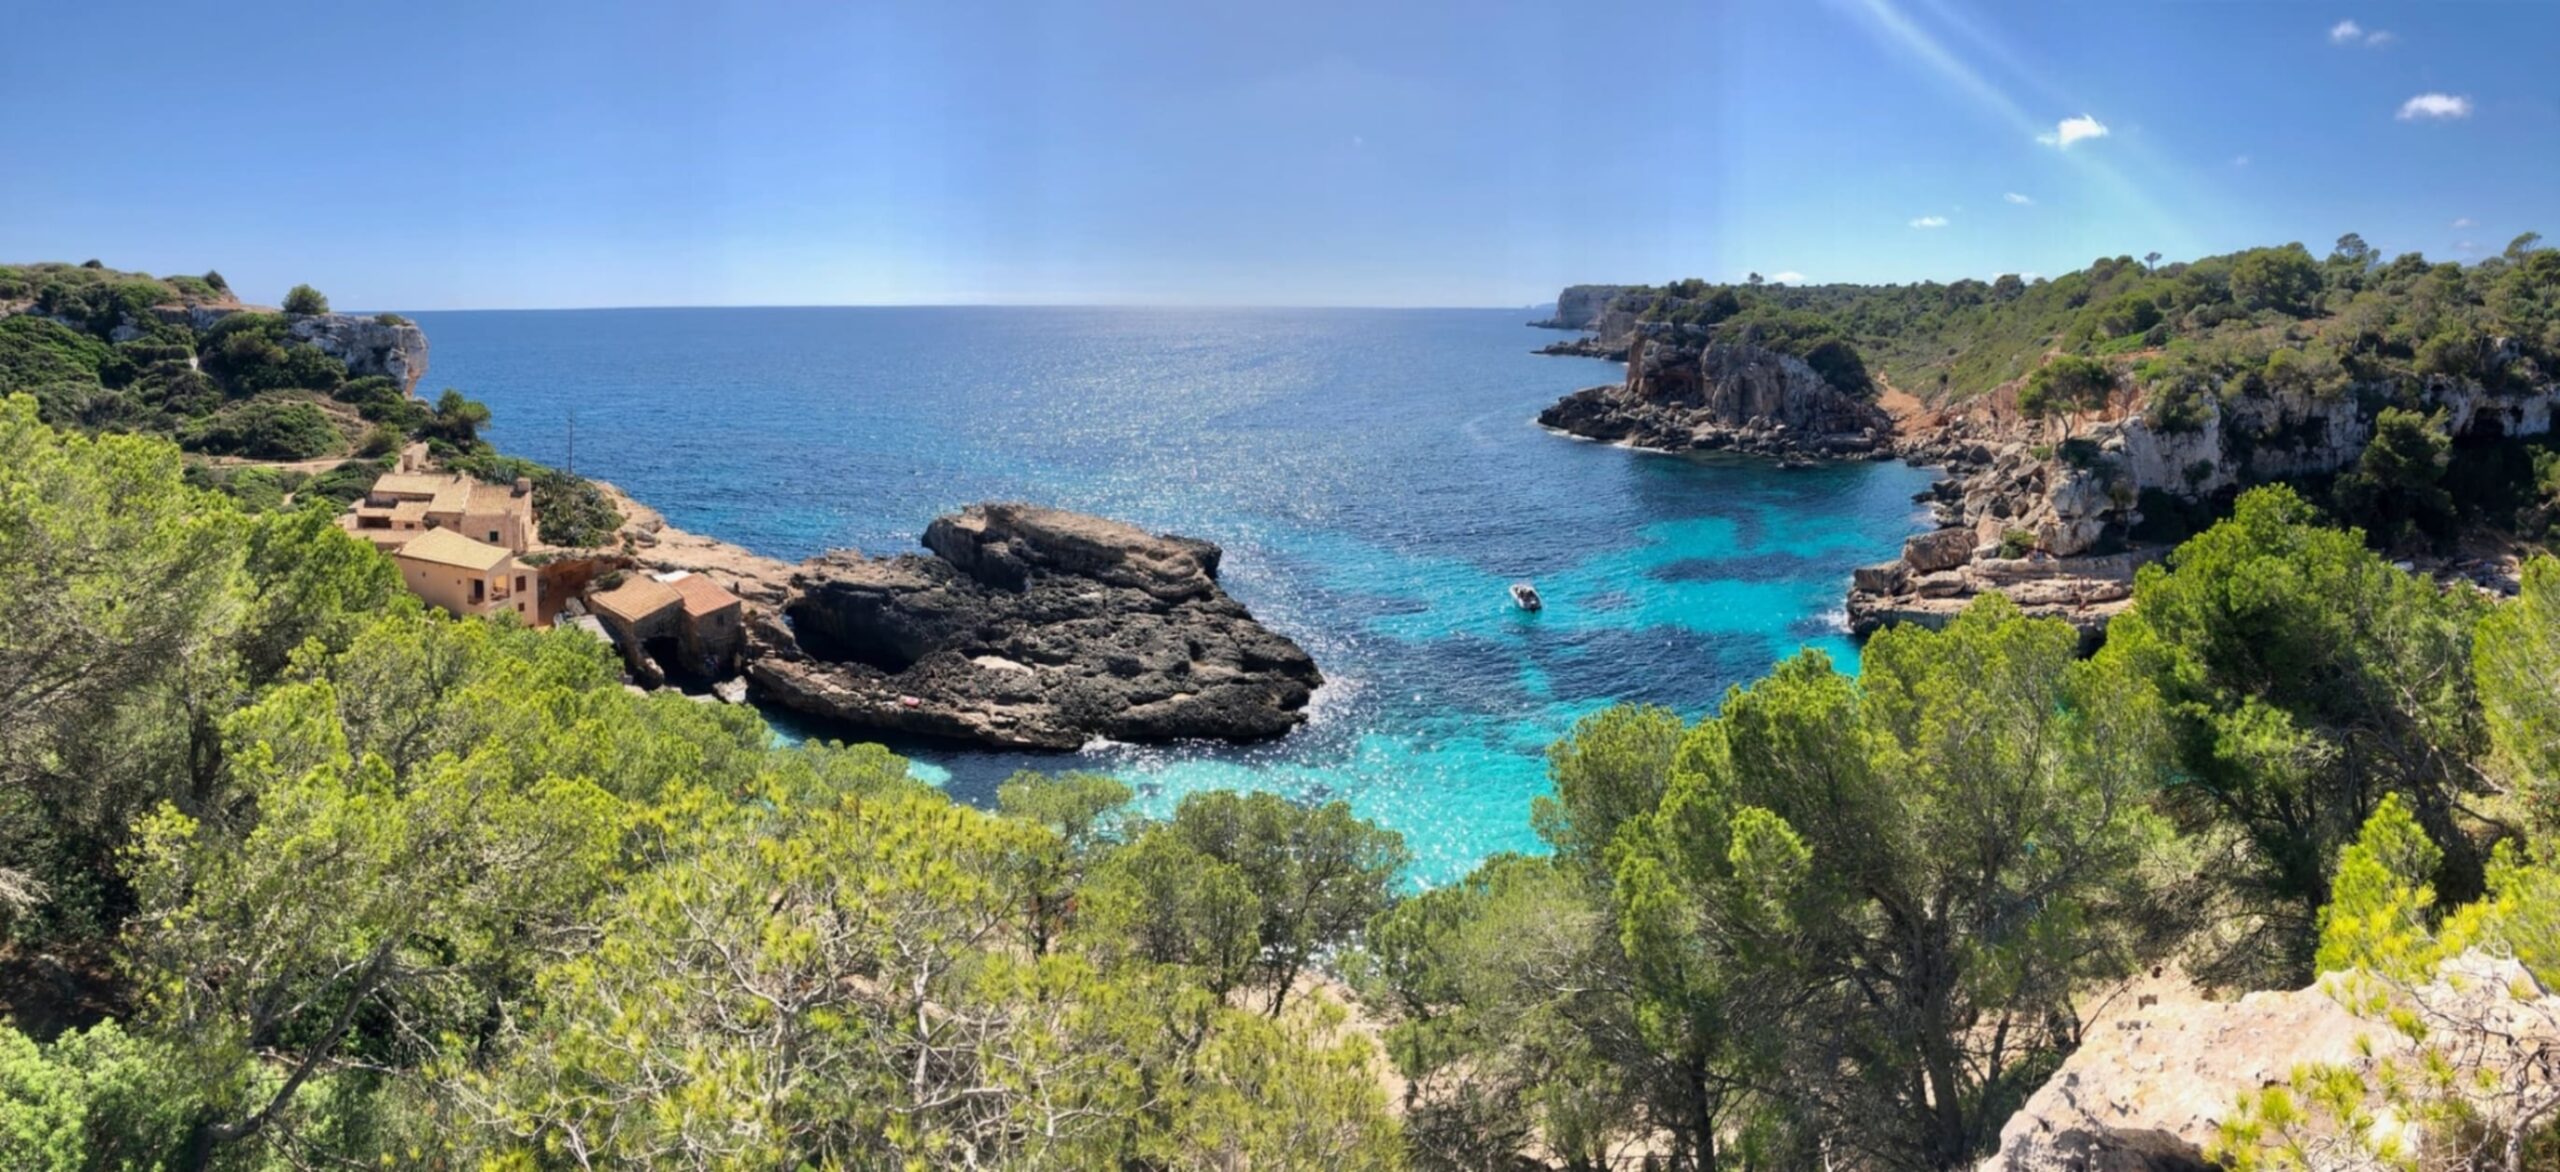 Descubre la belleza natural de Mallorca